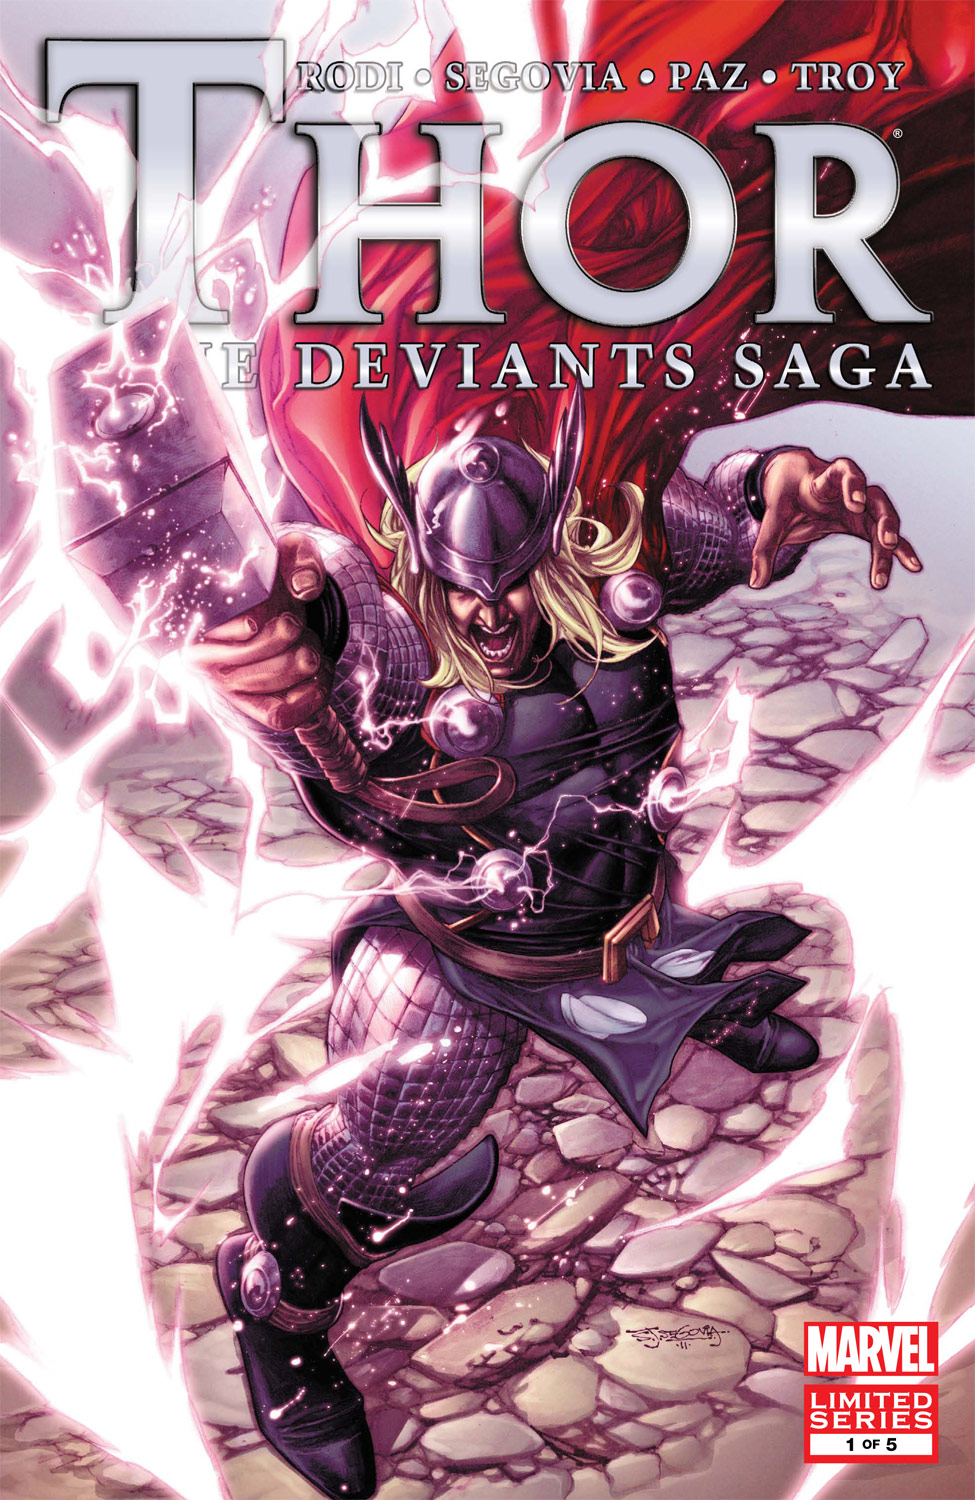 Thor: The Deviants Saga (2011) #1